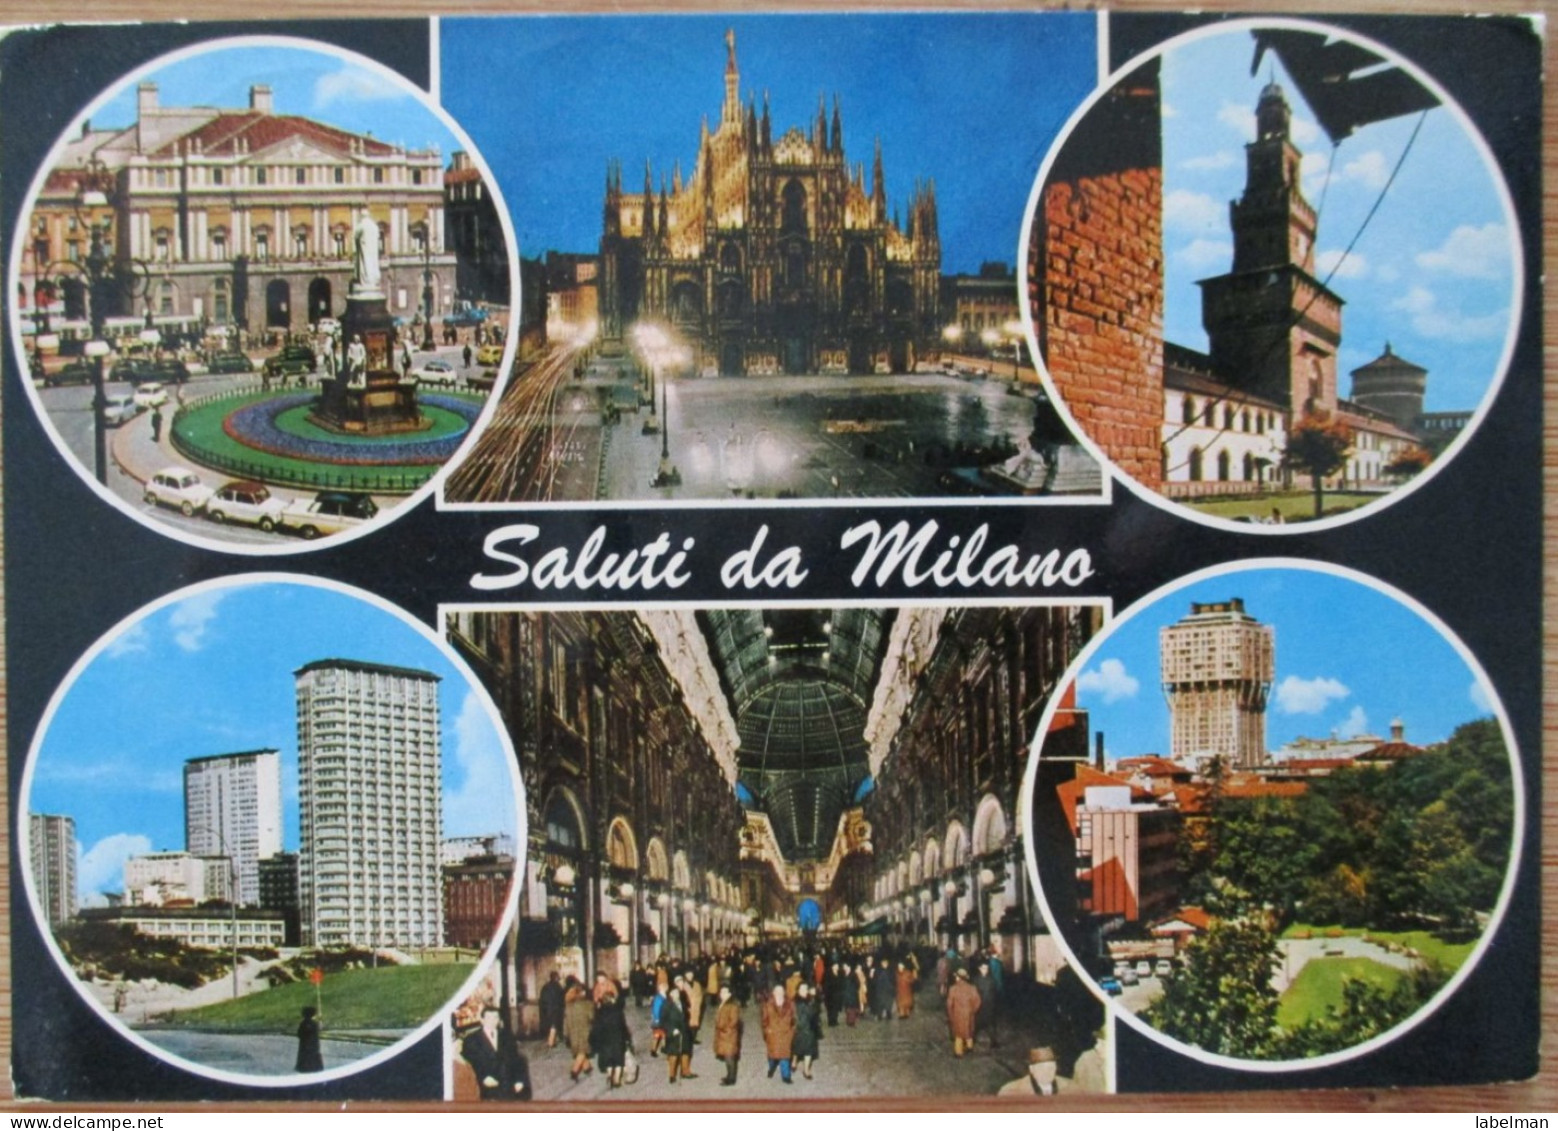 ITALIA ITALY MILANO MULTI VIEW PANORAMA POSTCARD CARTE POSTALE ANSICHTSKARTE CARTOLINA POSTKARTE CARD - Napoli (Naples)